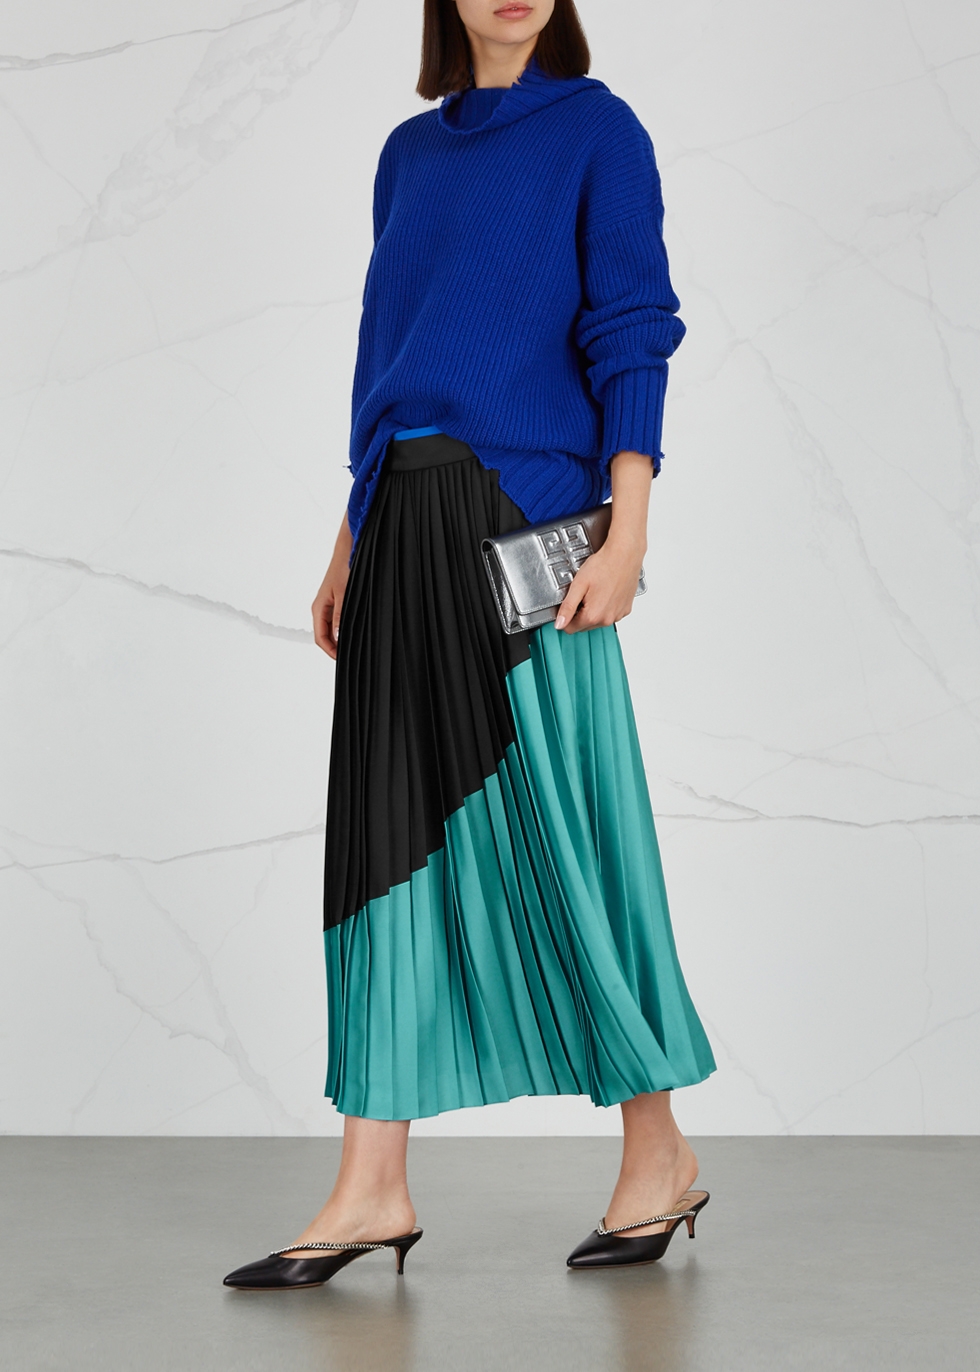 Colour-block pleated satin twill skirt - Victoria, Victoria Beckham